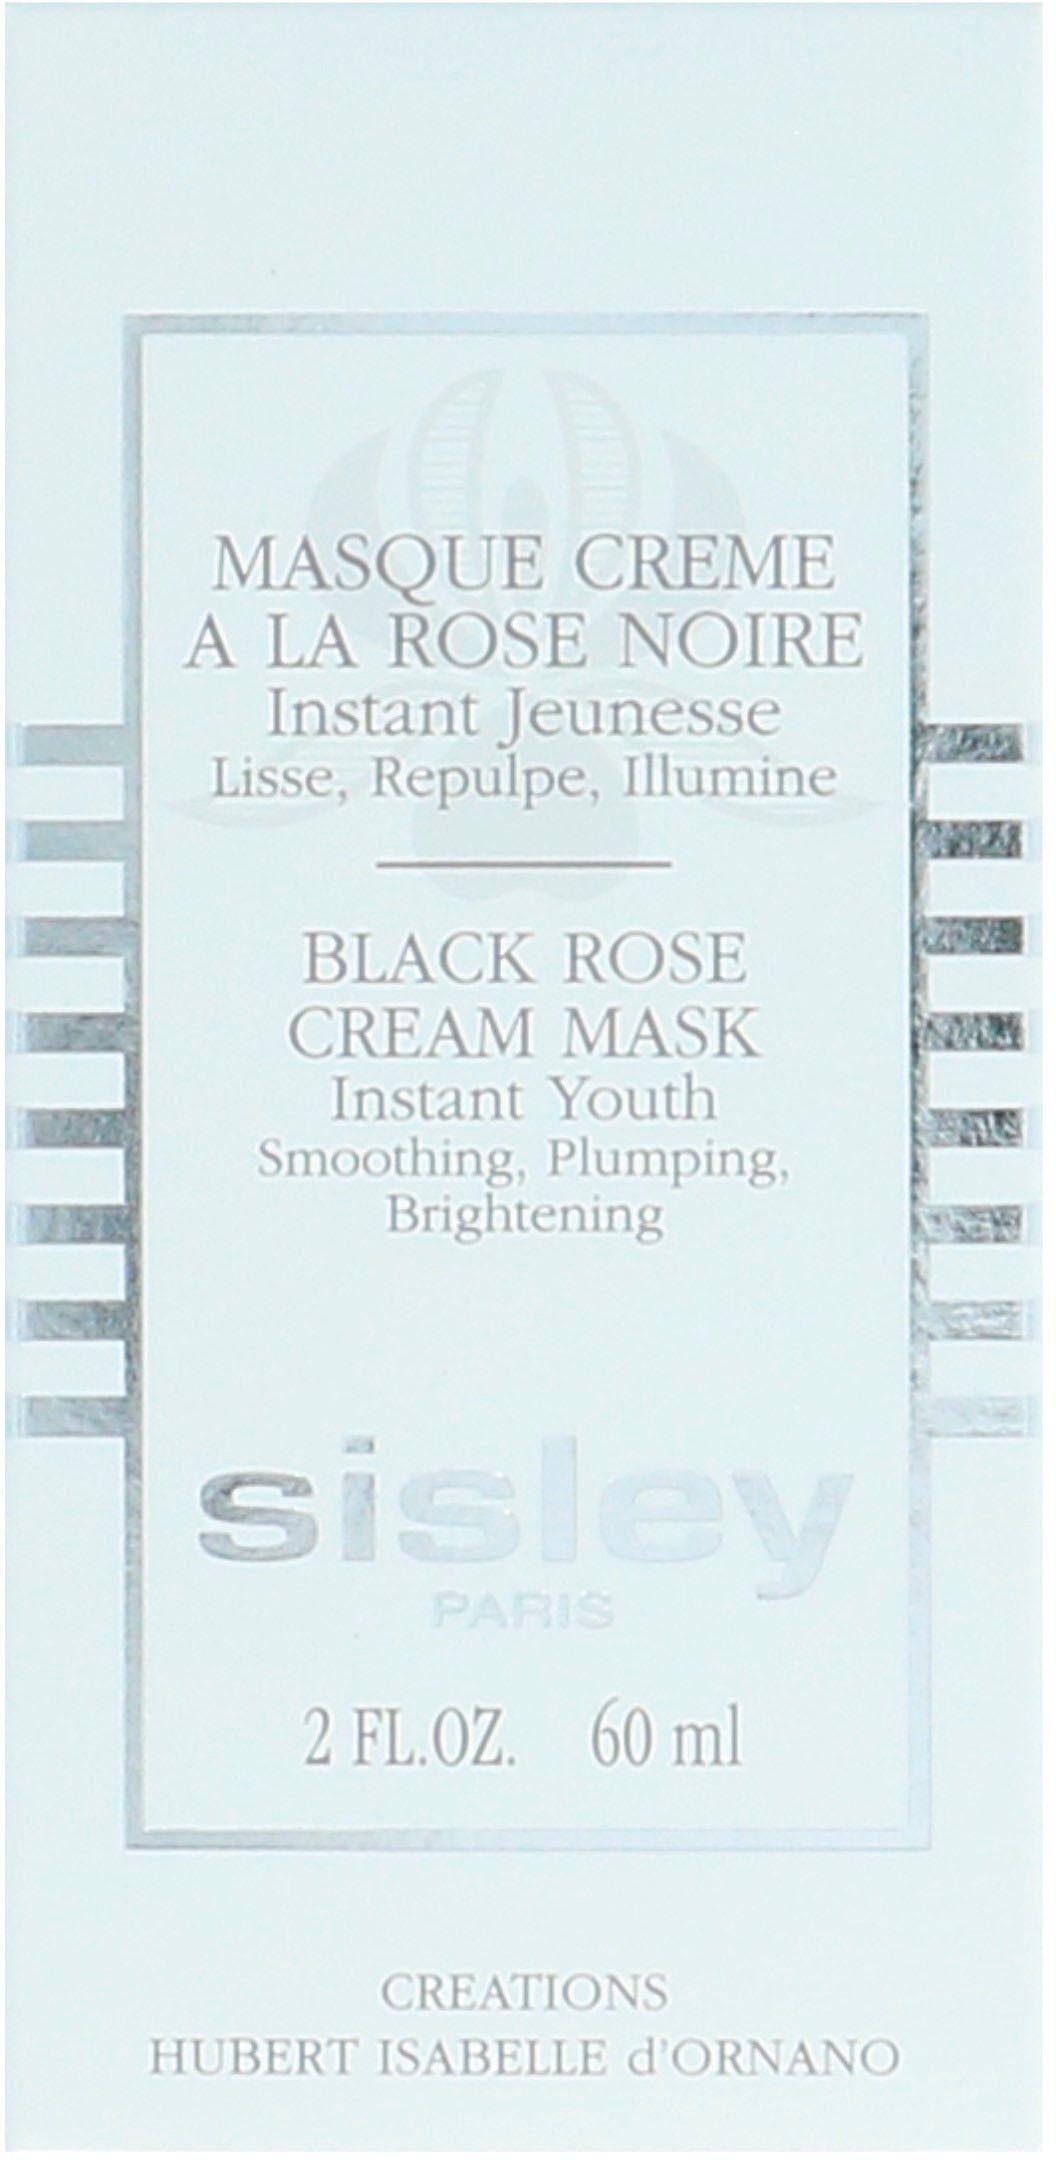 Black Cream Rose sisley Mask Gesichtsmaske